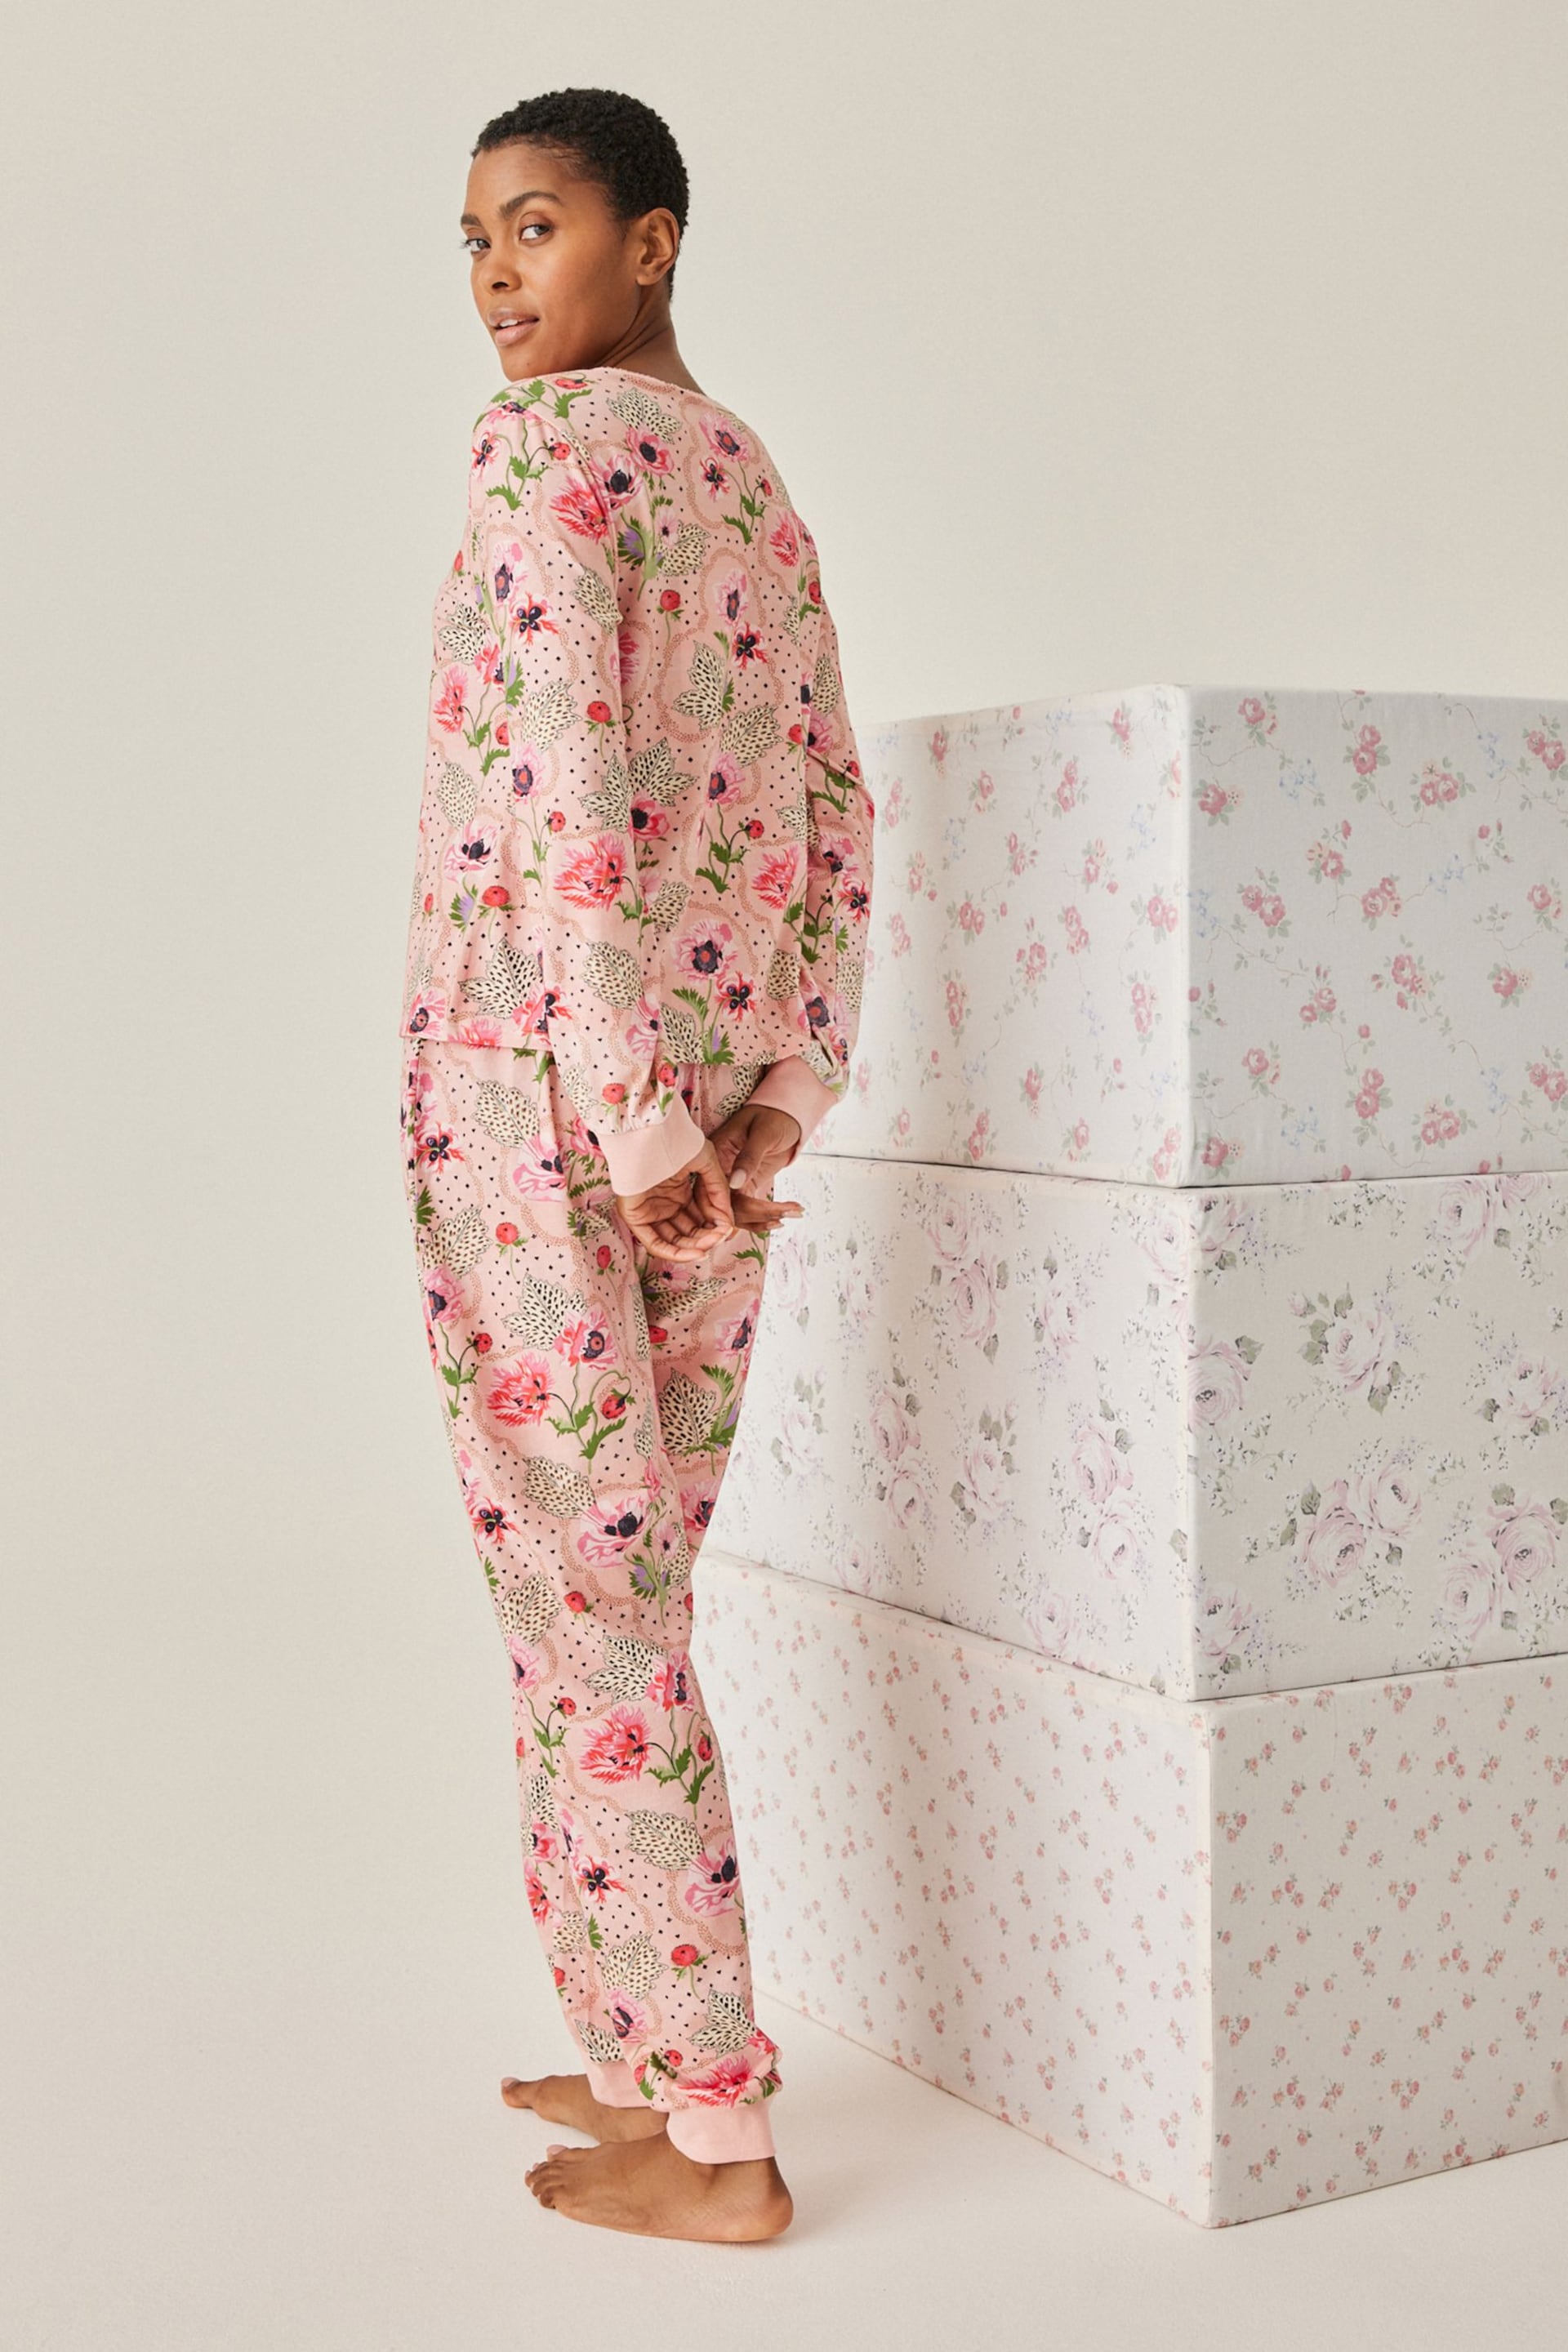 Cath Kidston Pink Floral Print Cotton Henley Pyjamas - Image 5 of 12